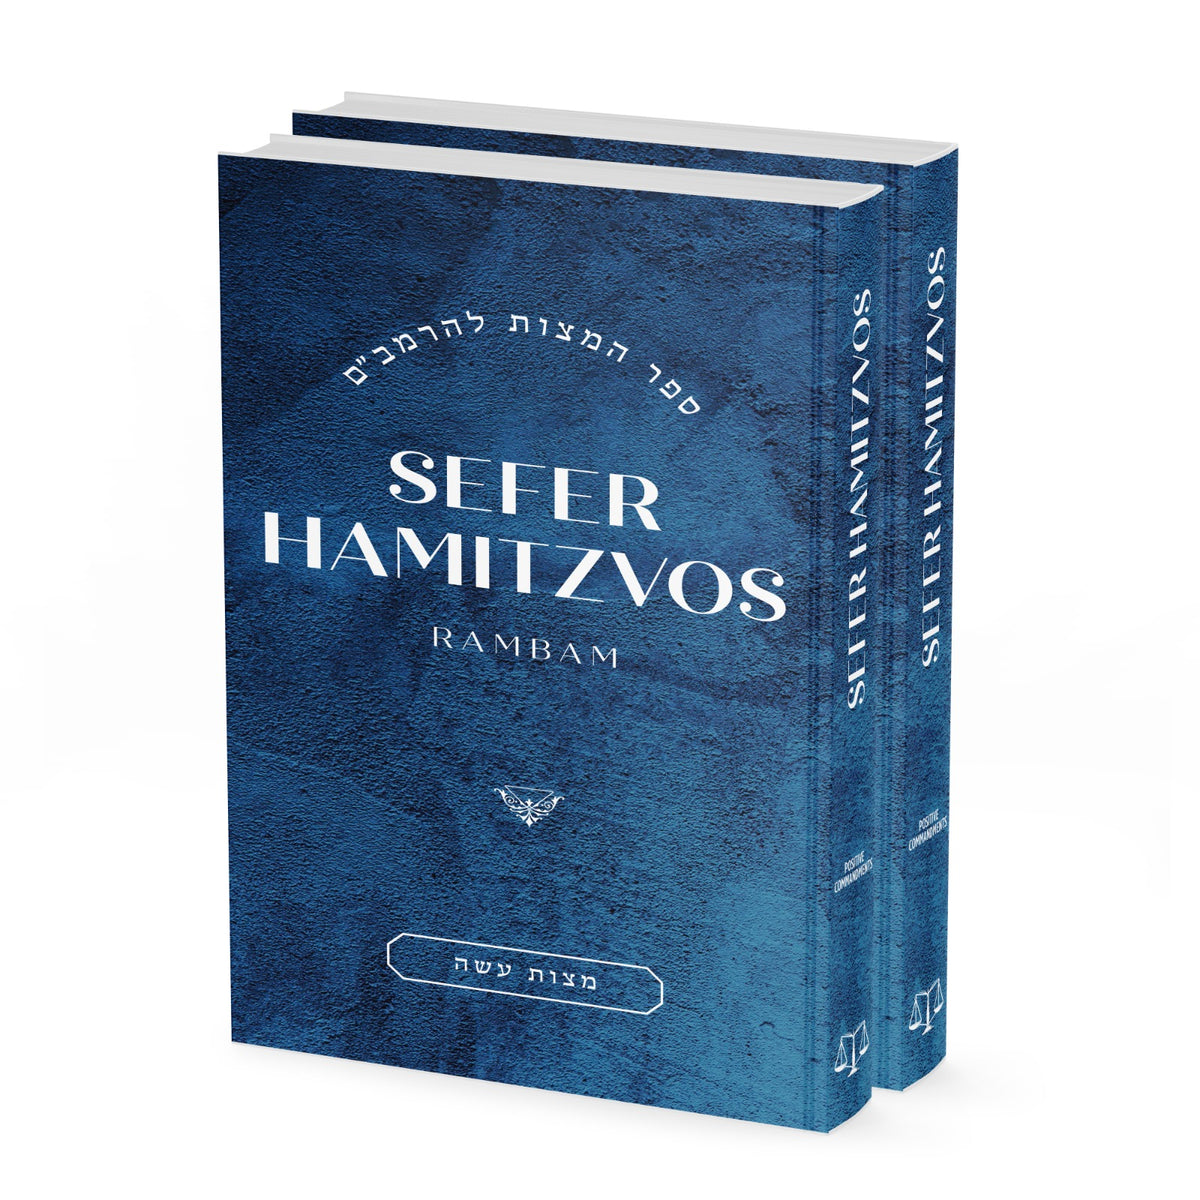 Book Come, Reza, Ama 9788466330343 by 10€ (Second Hand)